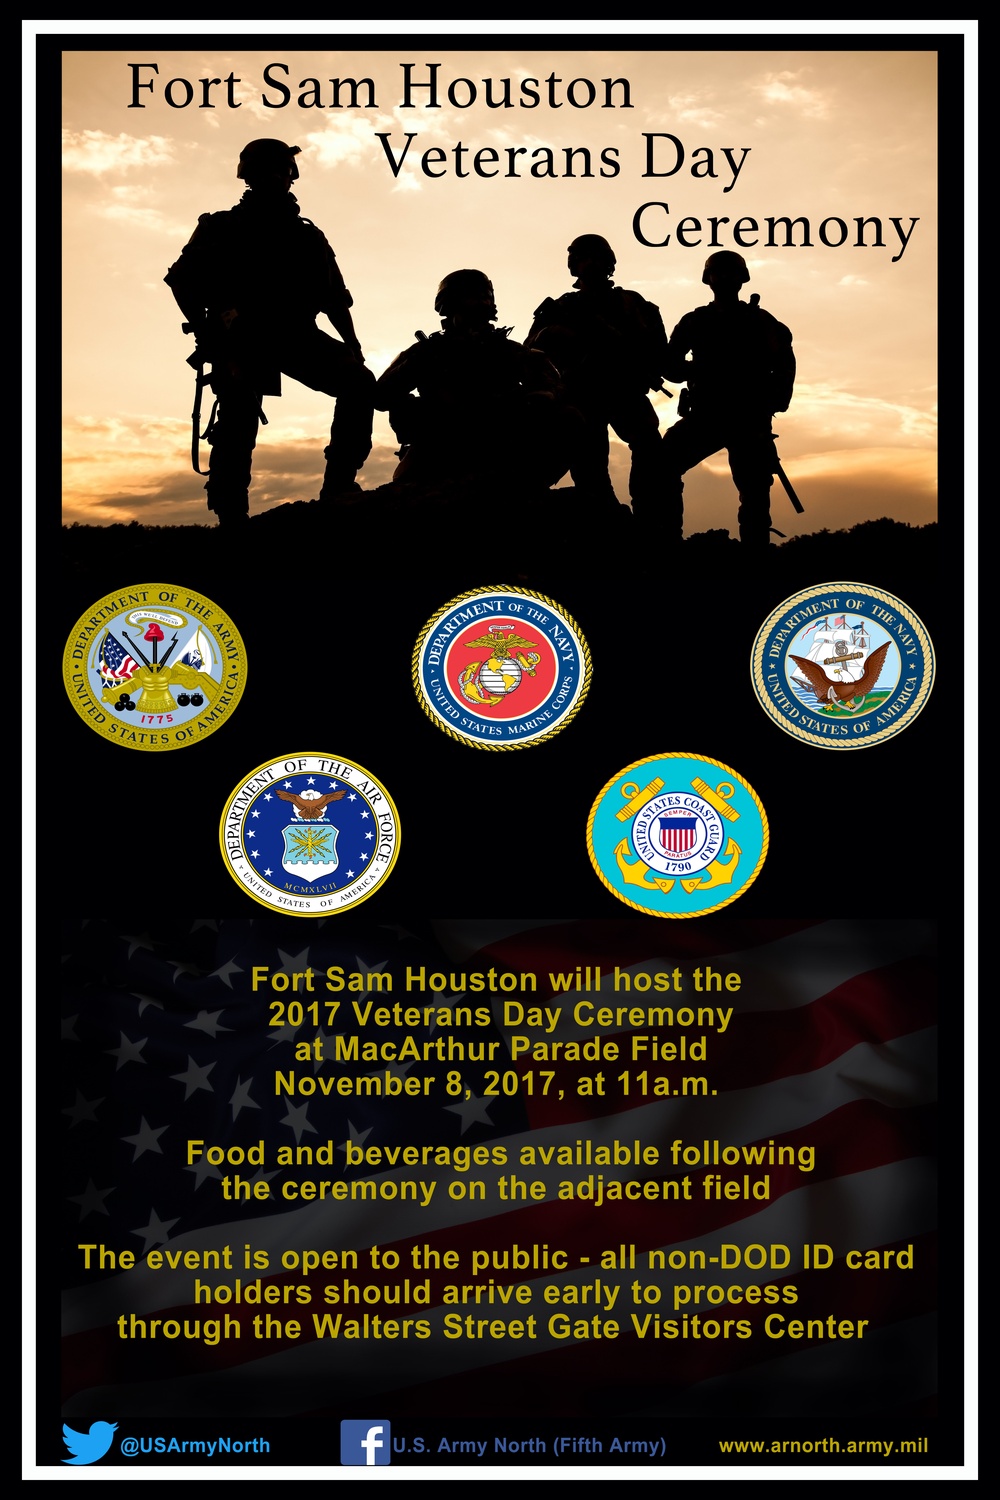 Fort Sam Houston holds special Veterans events